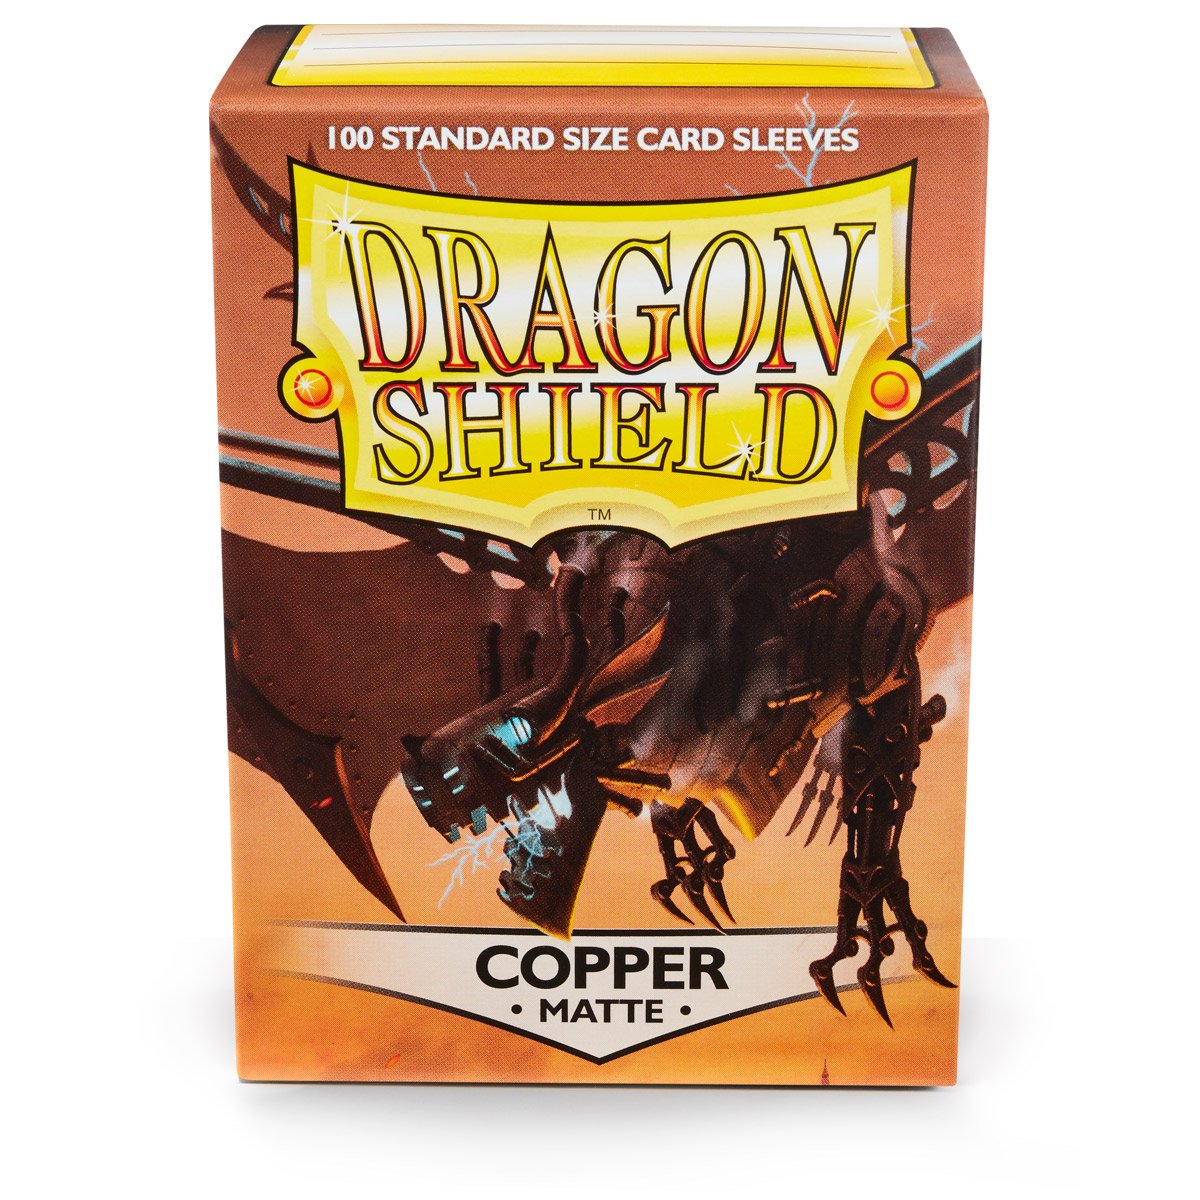 Dragon Shield Standard Size Sleeves  Matte Copper 100CT - Card Sleeves are Smooth & Tough - Compatible with Pokemon, Yu-Gi-Oh!, & Magic The Gathering Card Sleeves  MTG, TCG, OCG